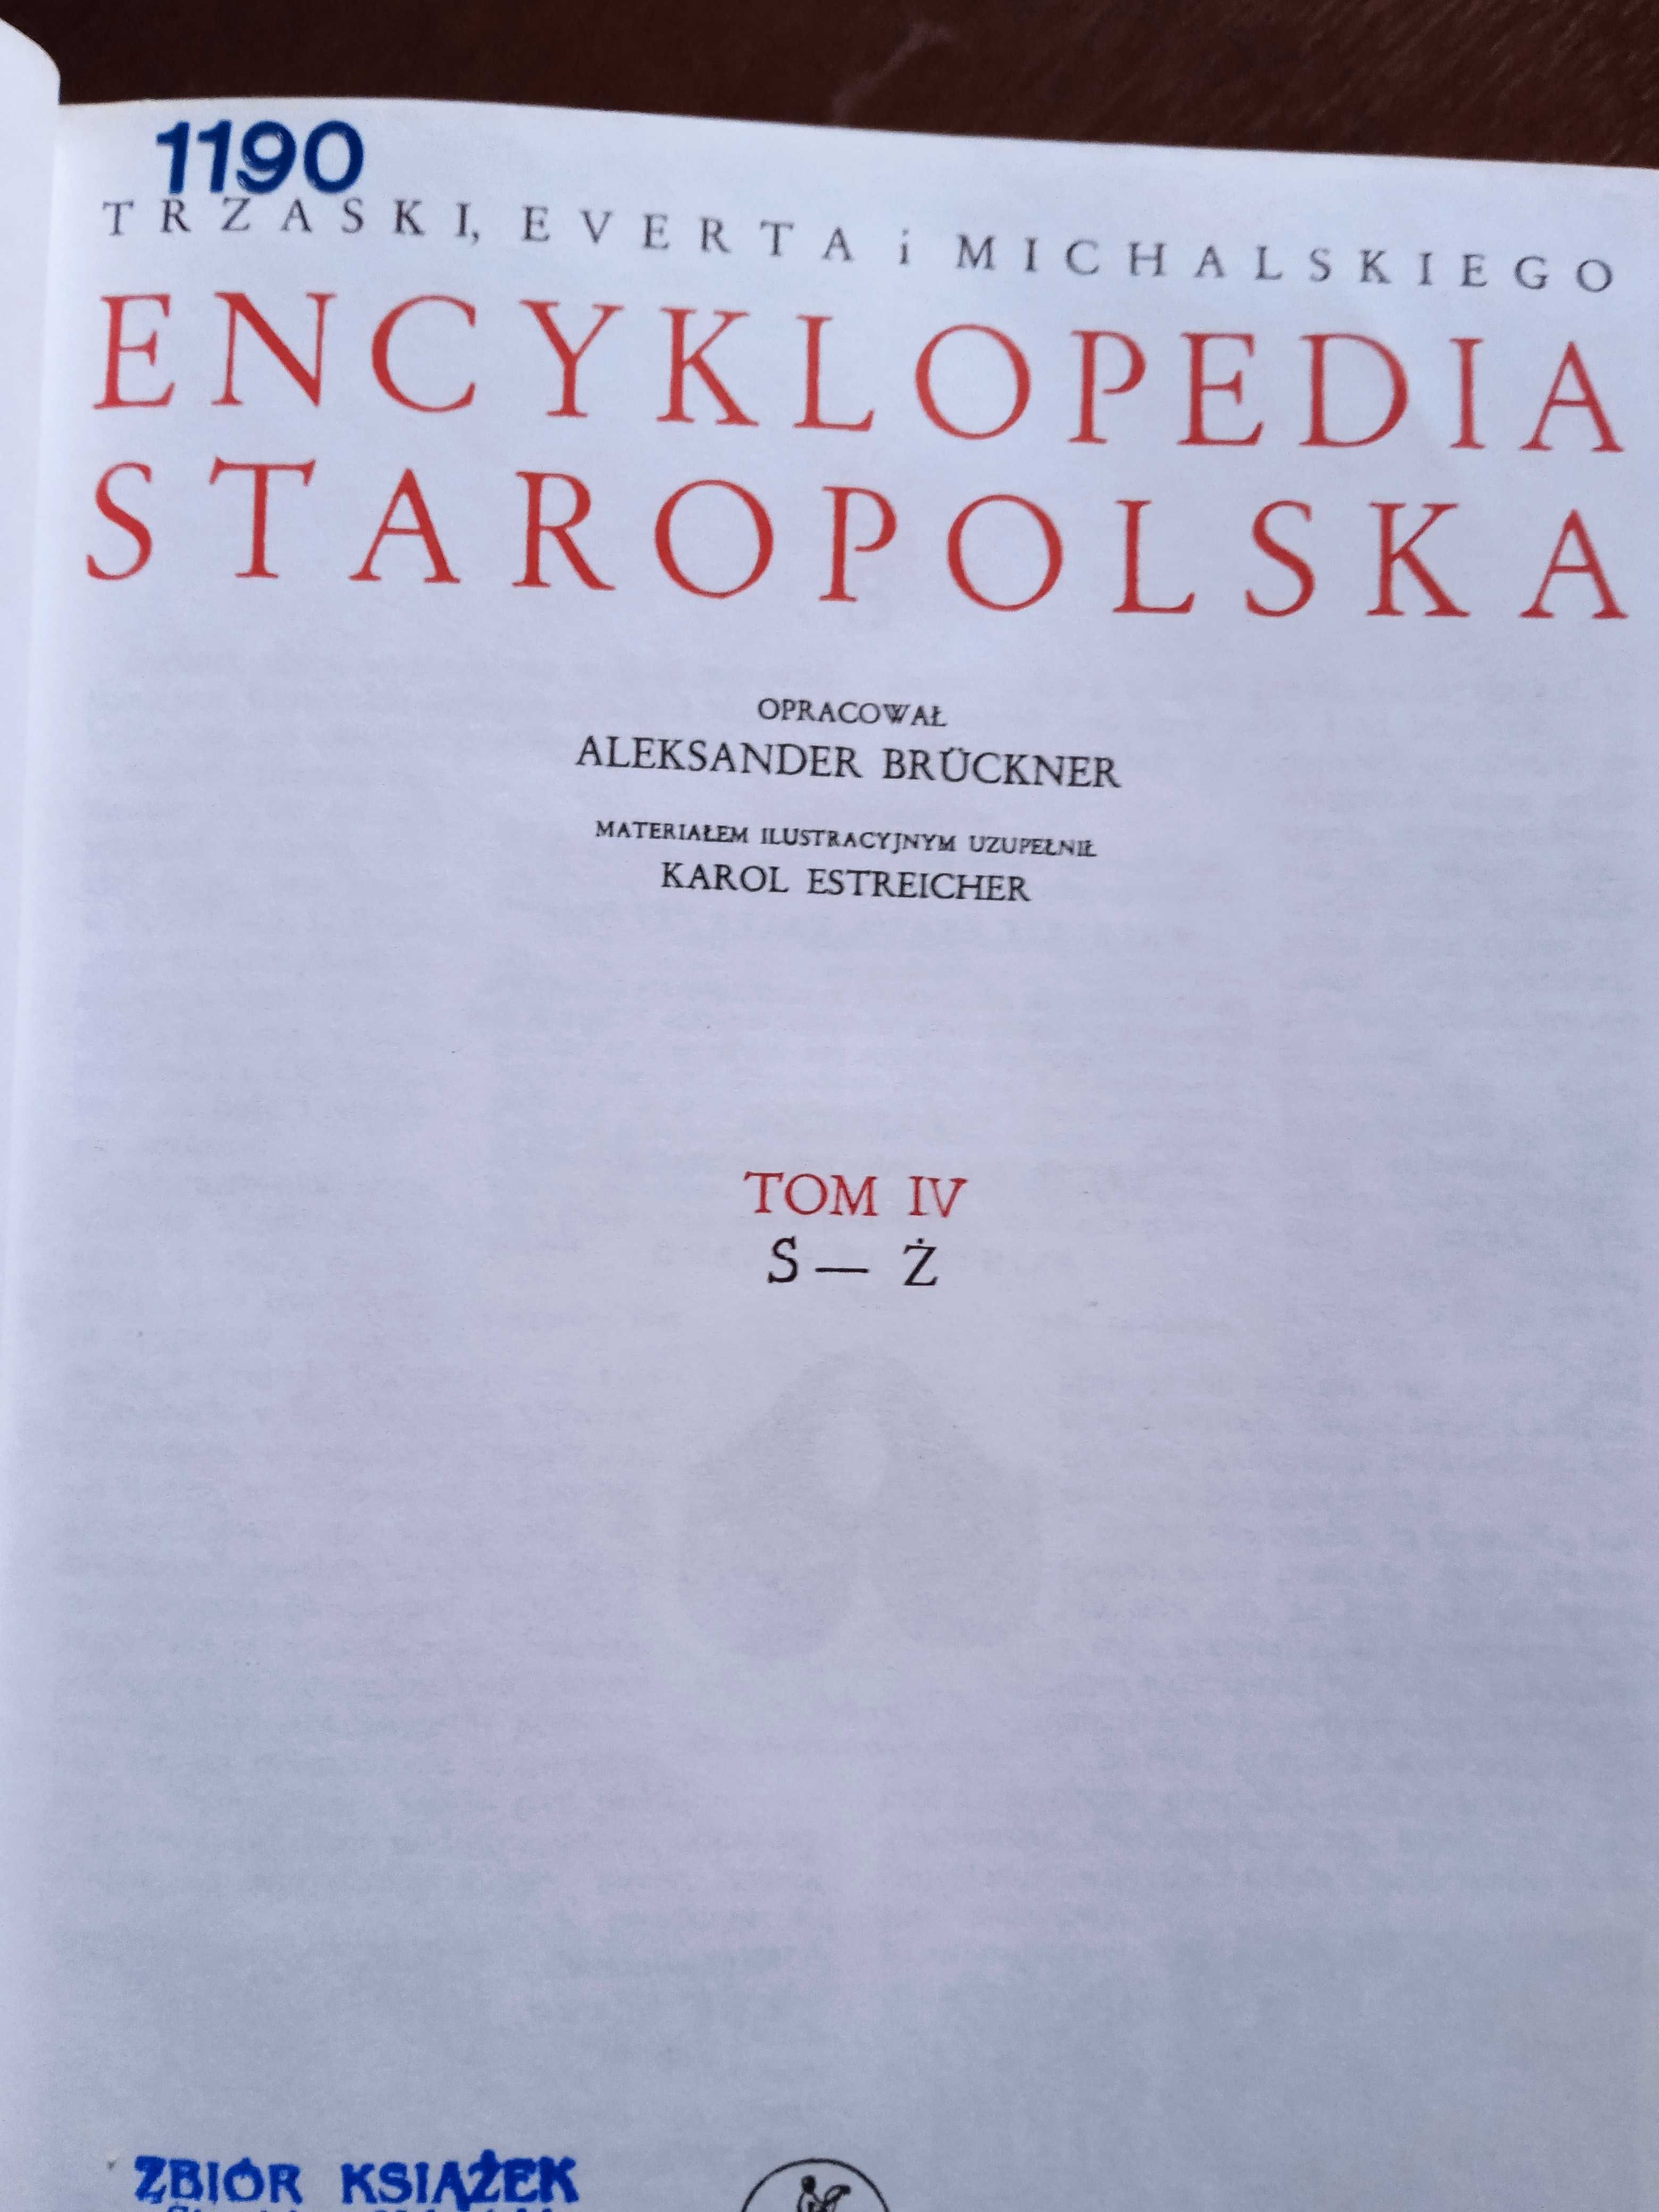 Encyklopedia staropolska ilustrowana